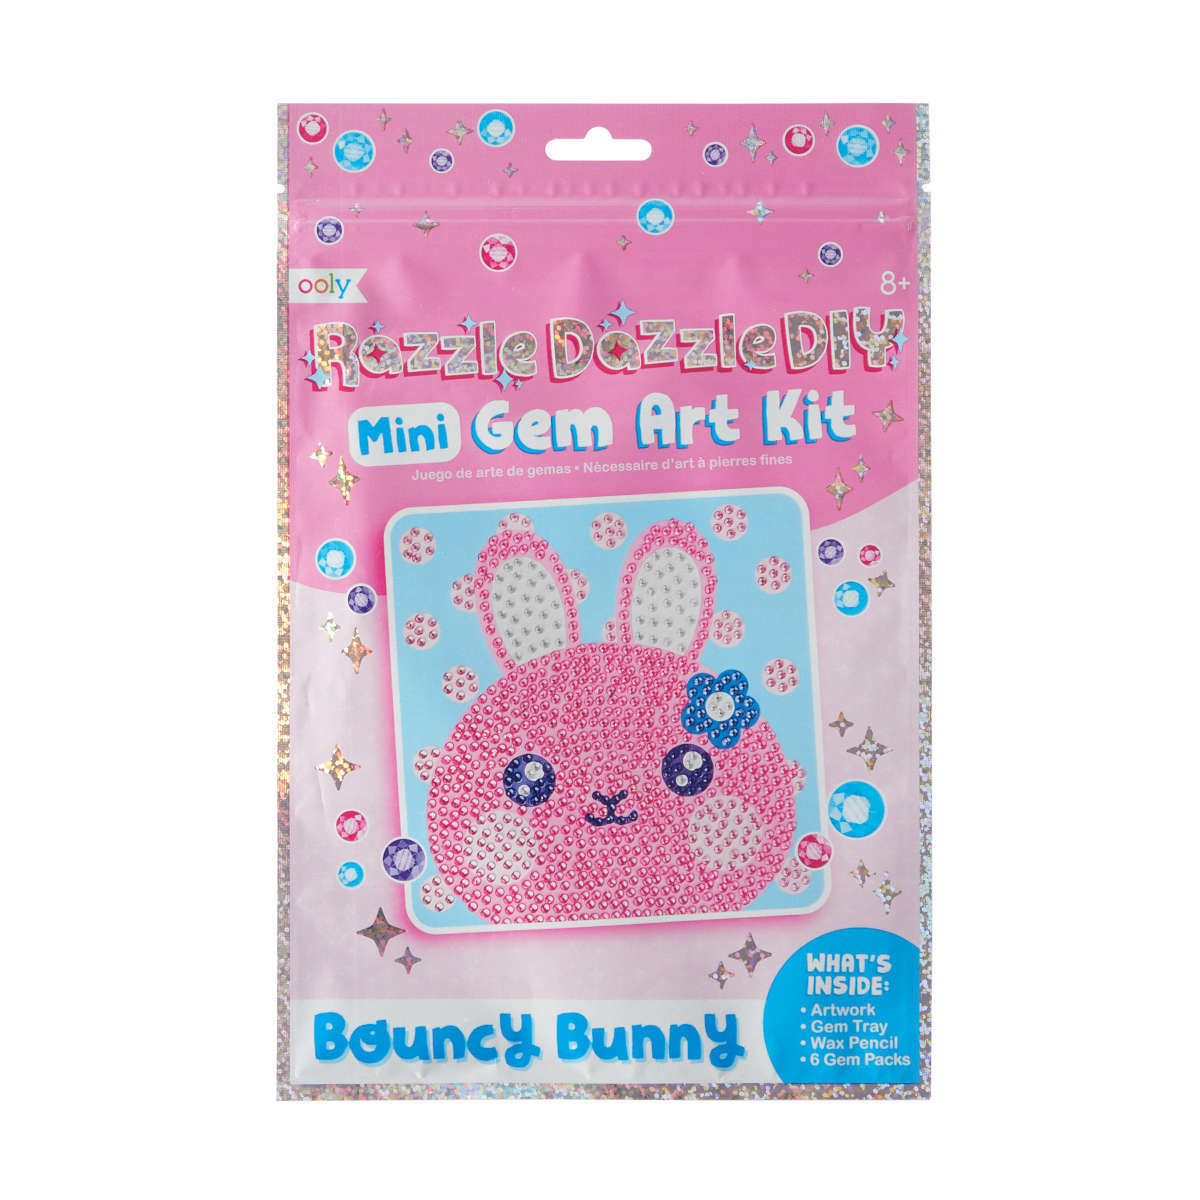 Ooly Mini Razzle Dazzle DIY Gem Art Kit - Bouncy Bunny